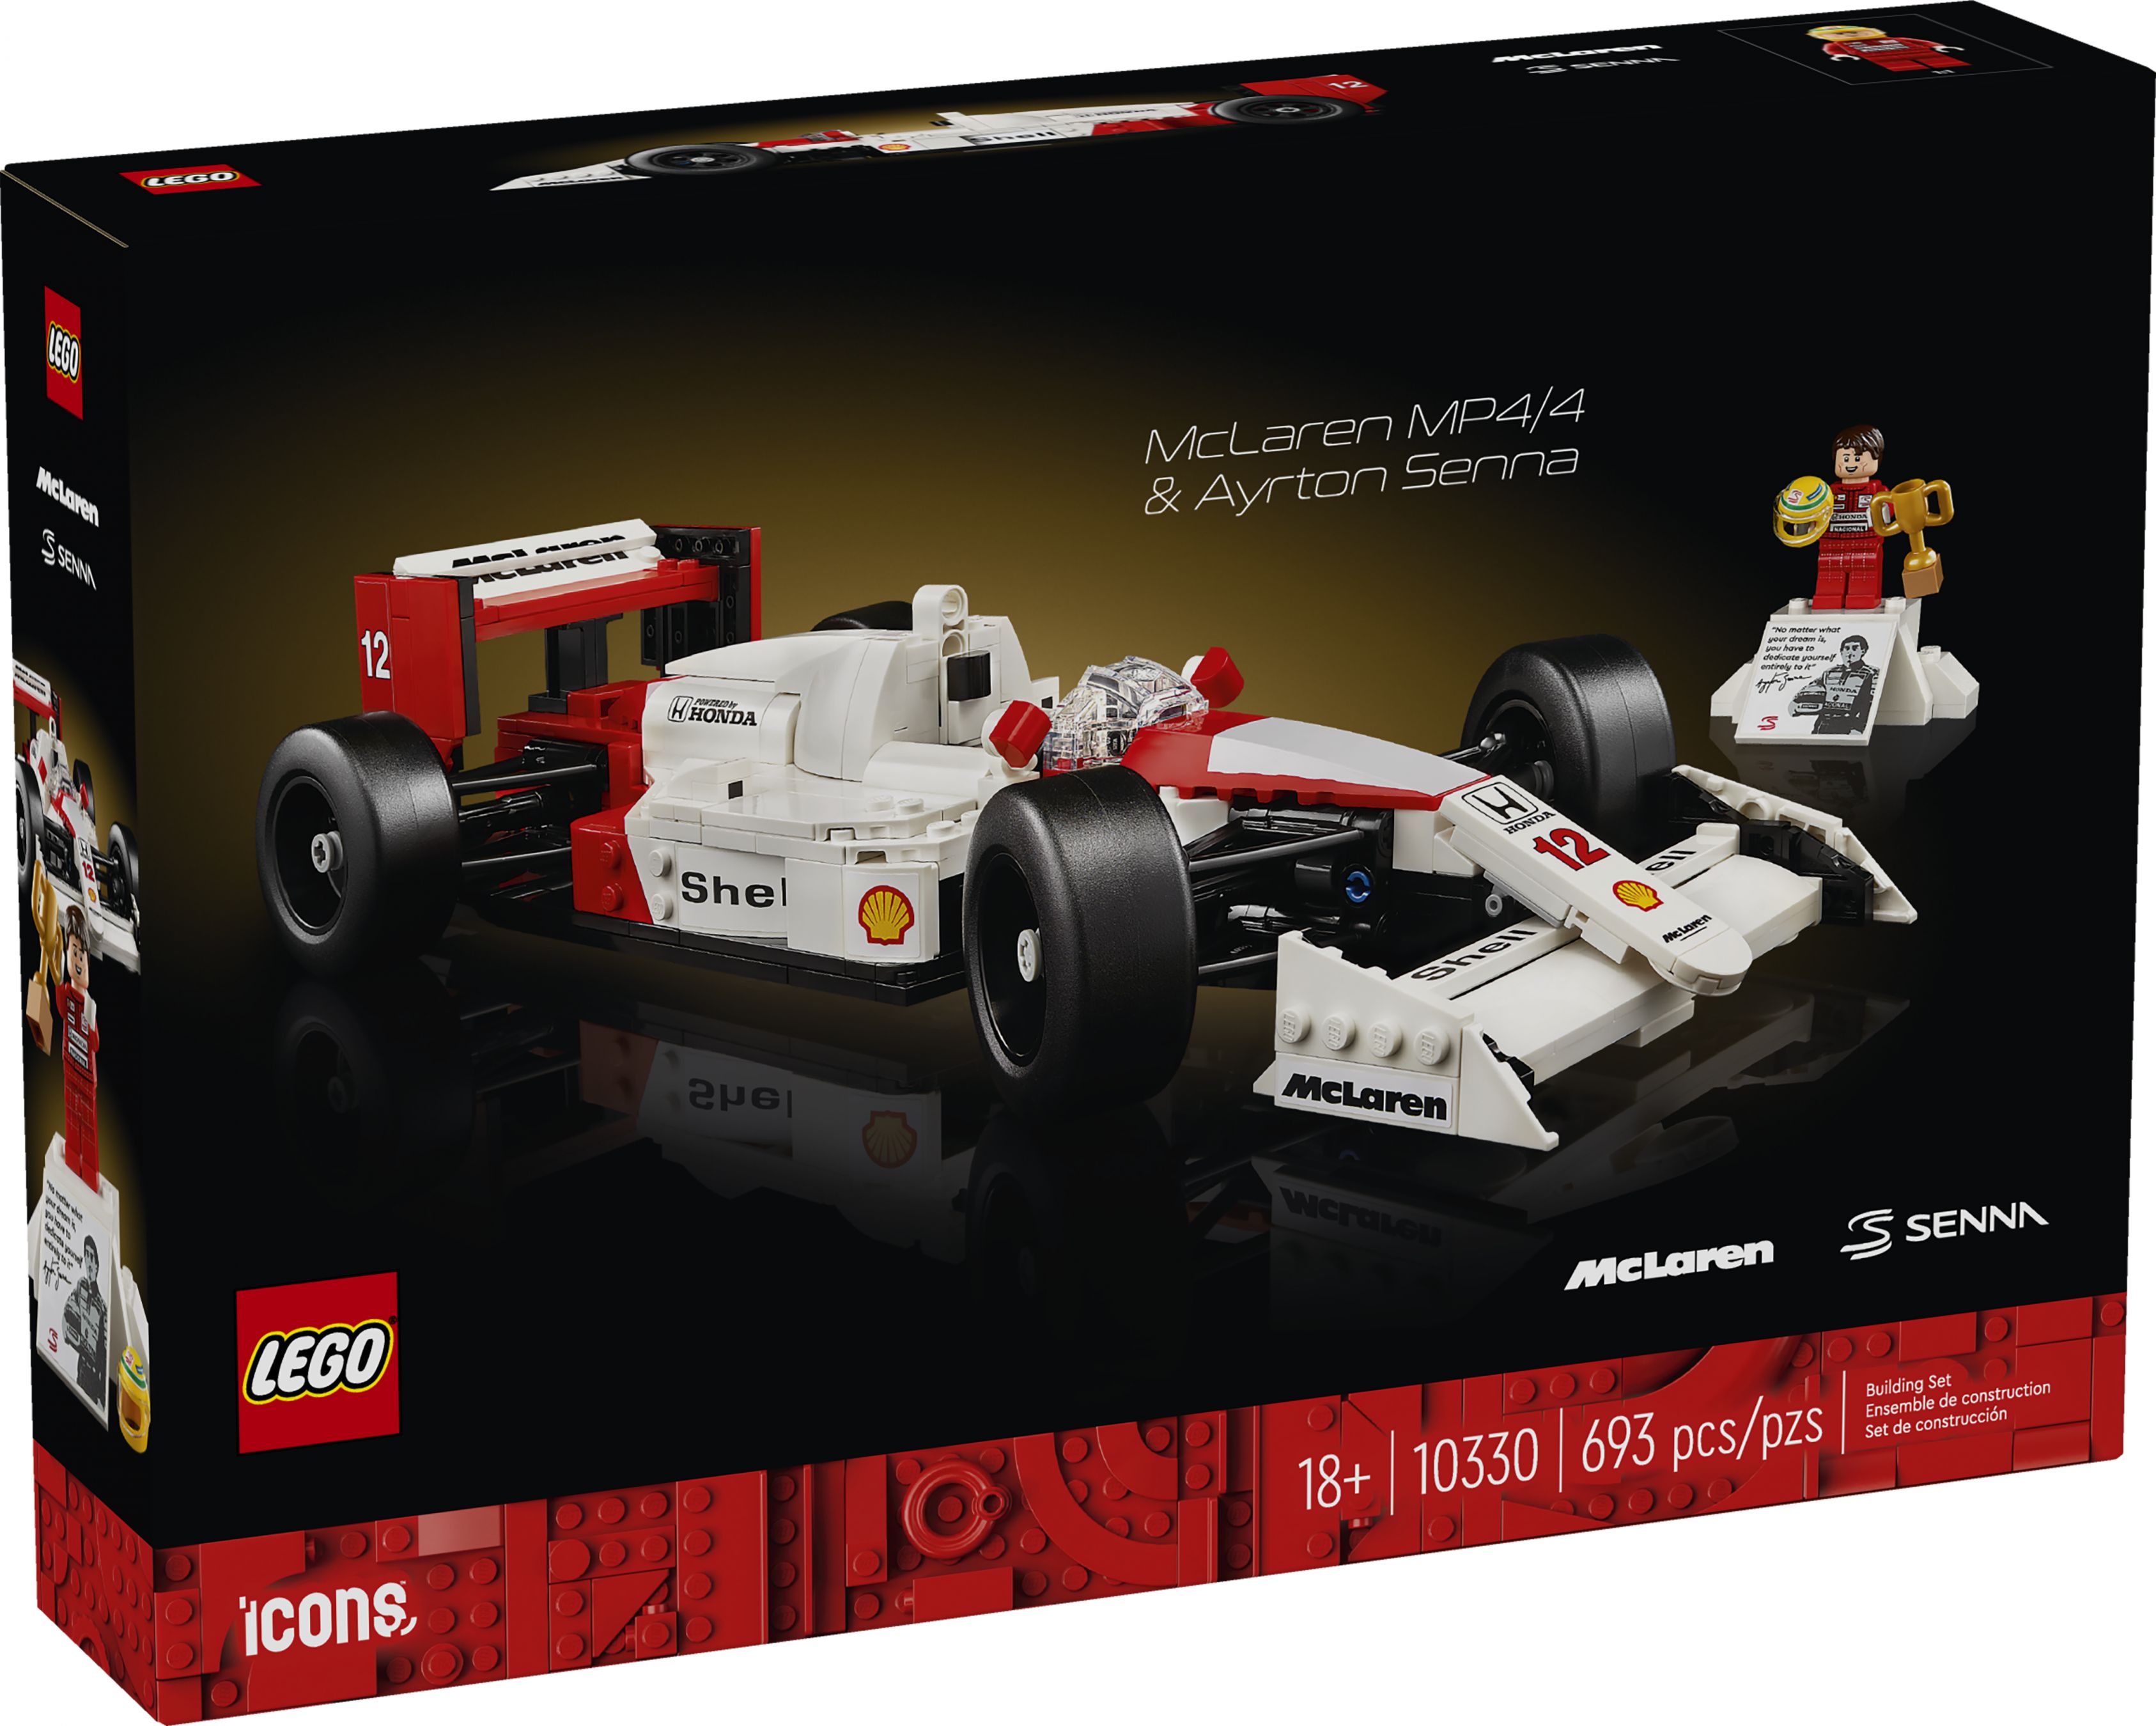 LEGO Advanced Models 10330 McLaren MP4/4 & Ayrton Senna LEGO_10330_Box1_v39.jpg